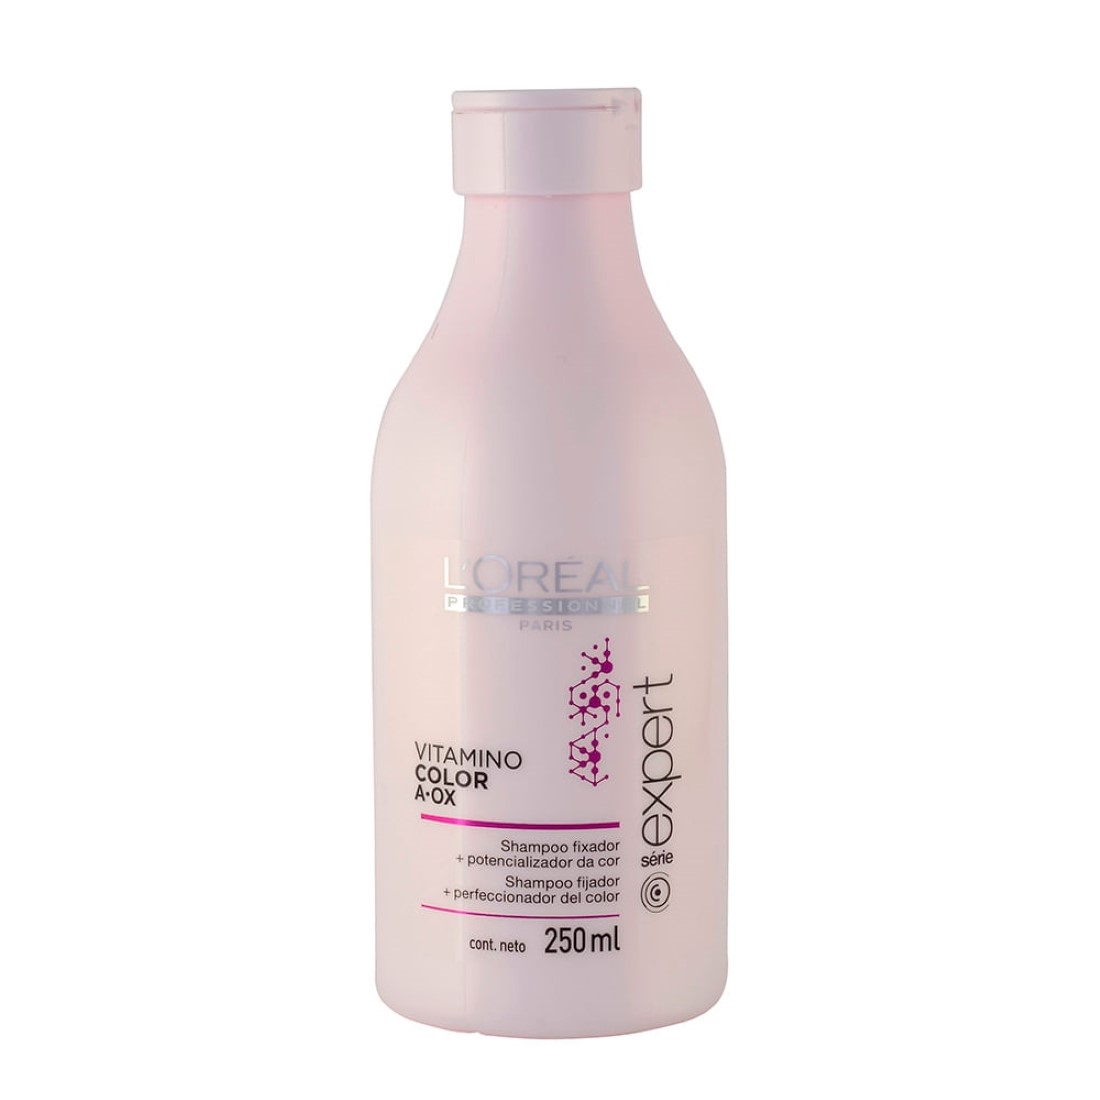 Shampoo Fixador + Potencializador da Cor Vitamino Color A?OX 250ml - L'Oréal Professionnel